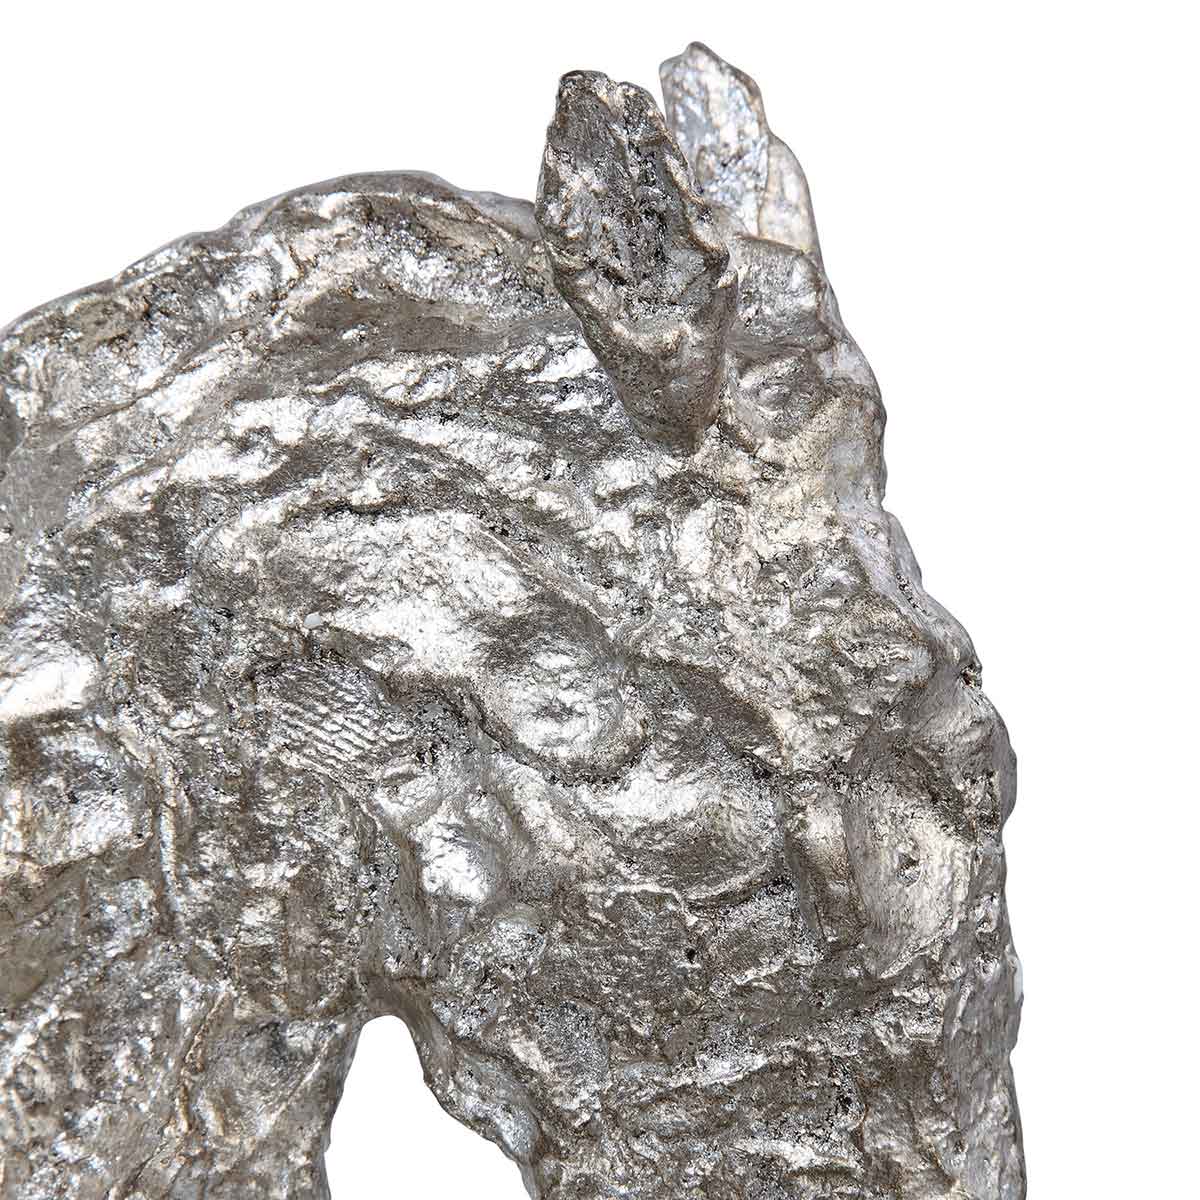 Uttermost Foal Sculpture - Antique Silver